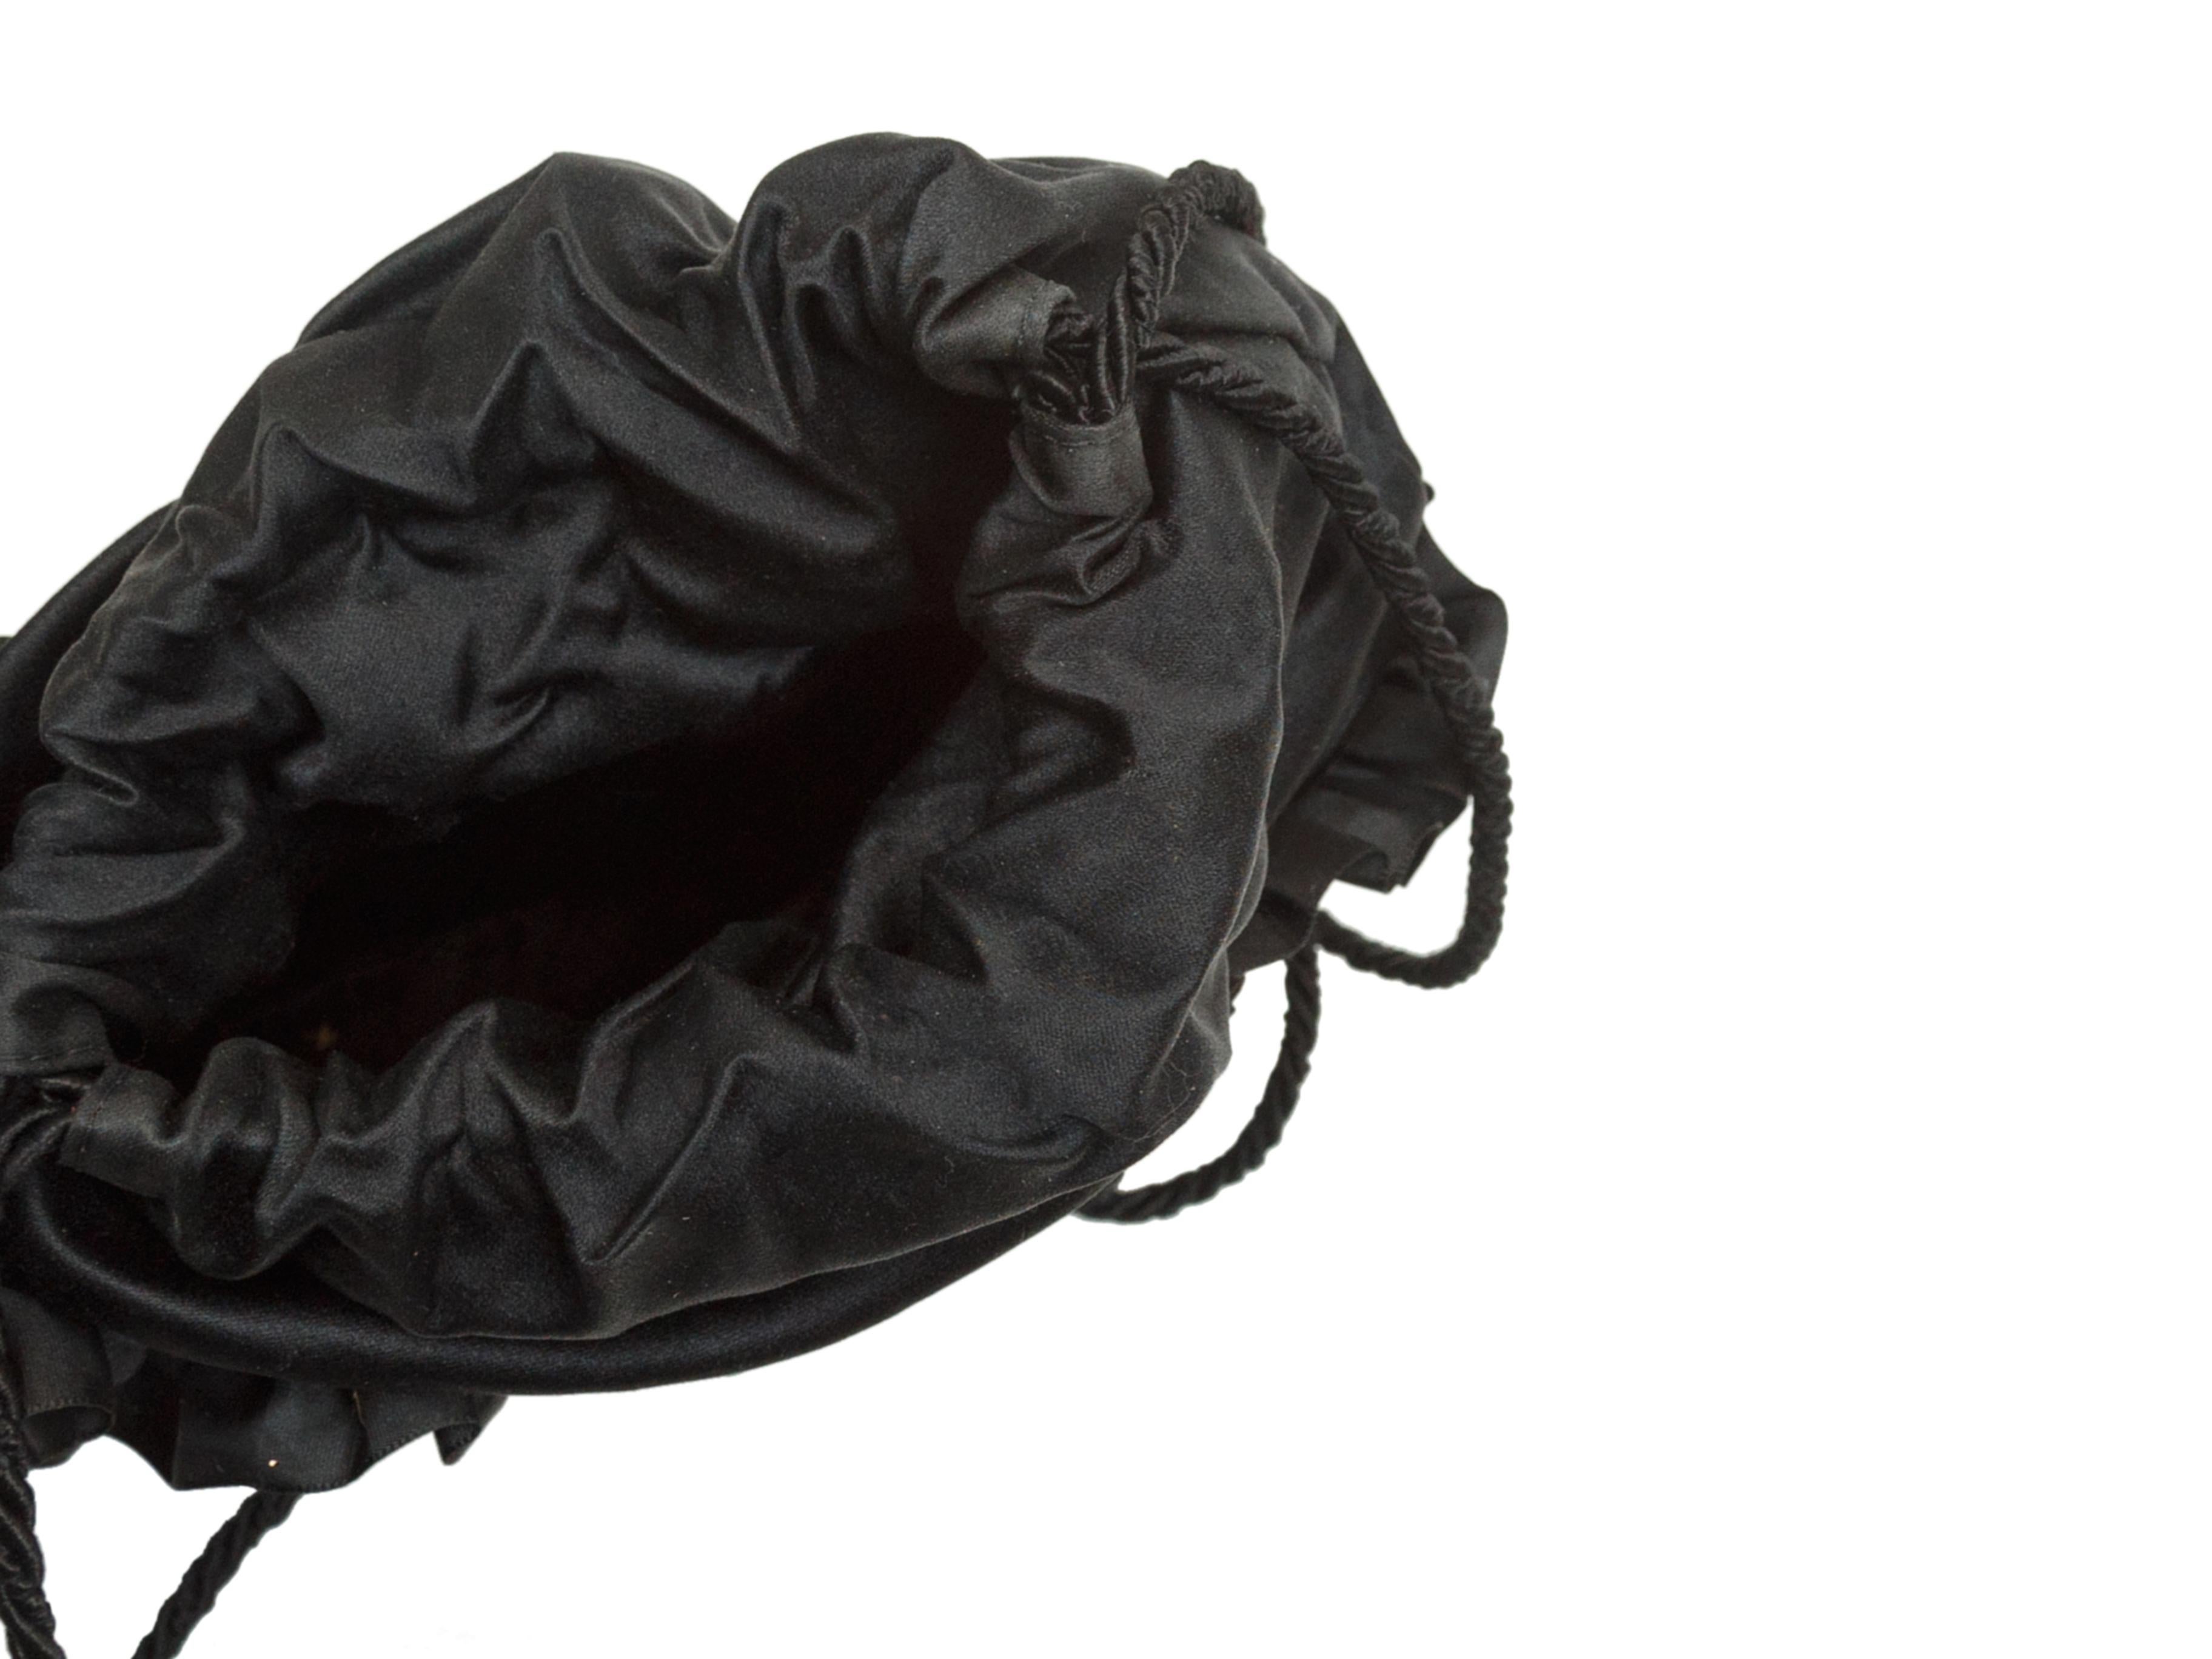 Product details: Vintage black Intrecciato satin bucket bag by Bottega Veneta. Drawstring pull closure at top. 6.75